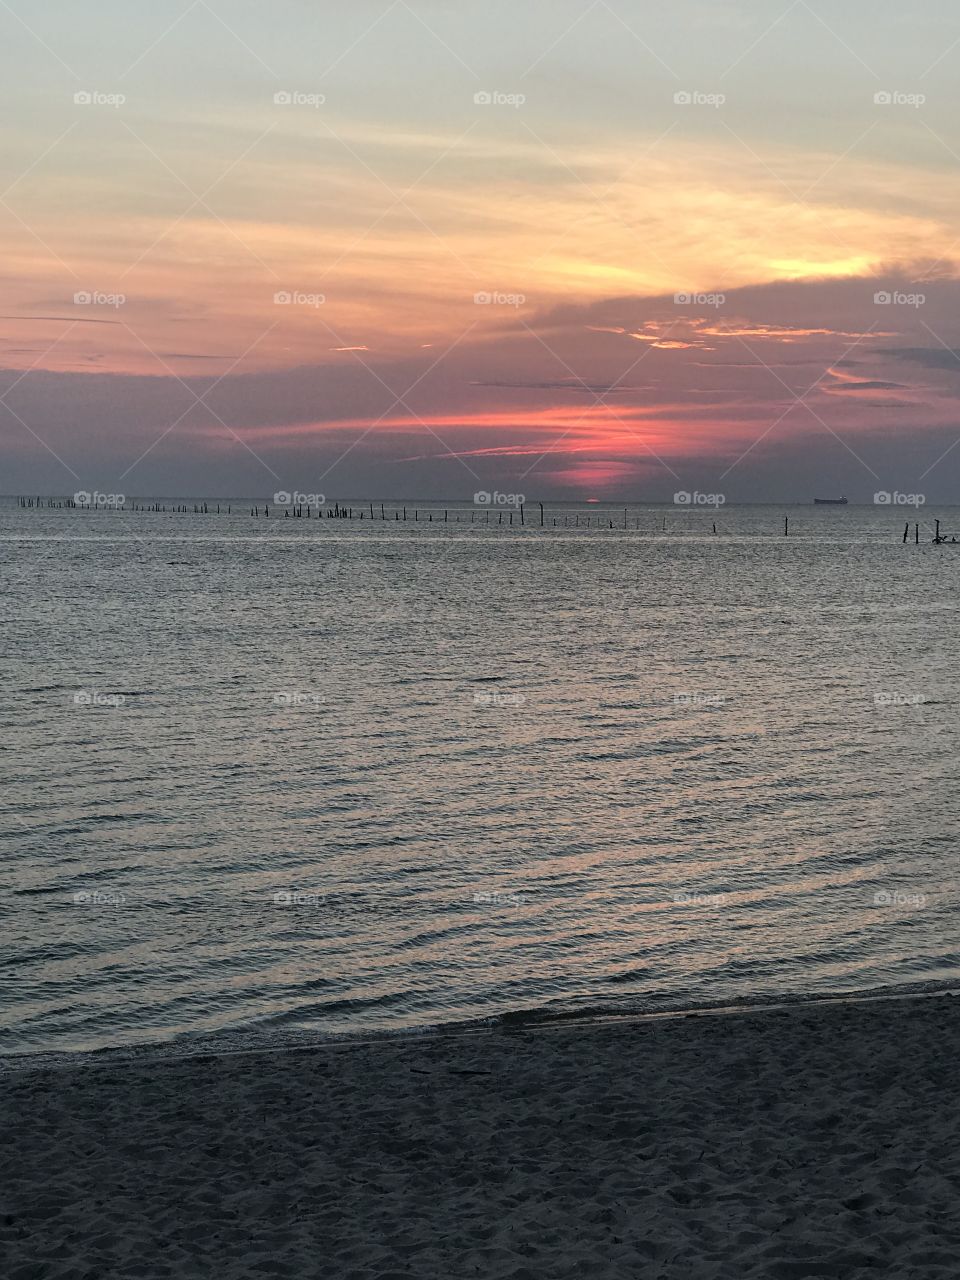 Sunset on the Chesapeake bay. 